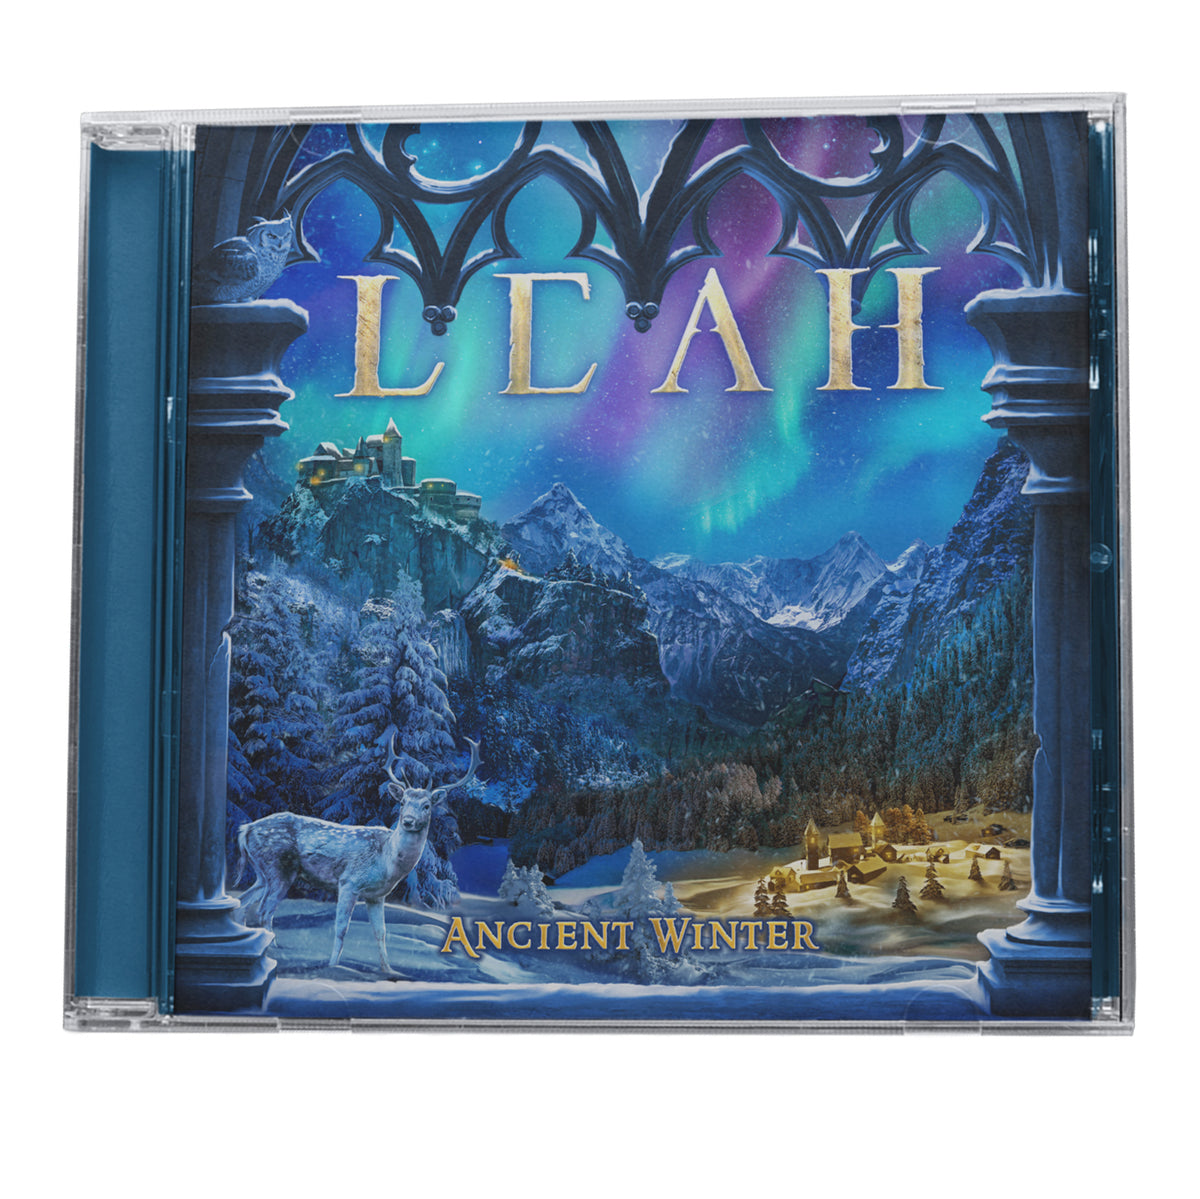 Ancient Winter CD - Jewel